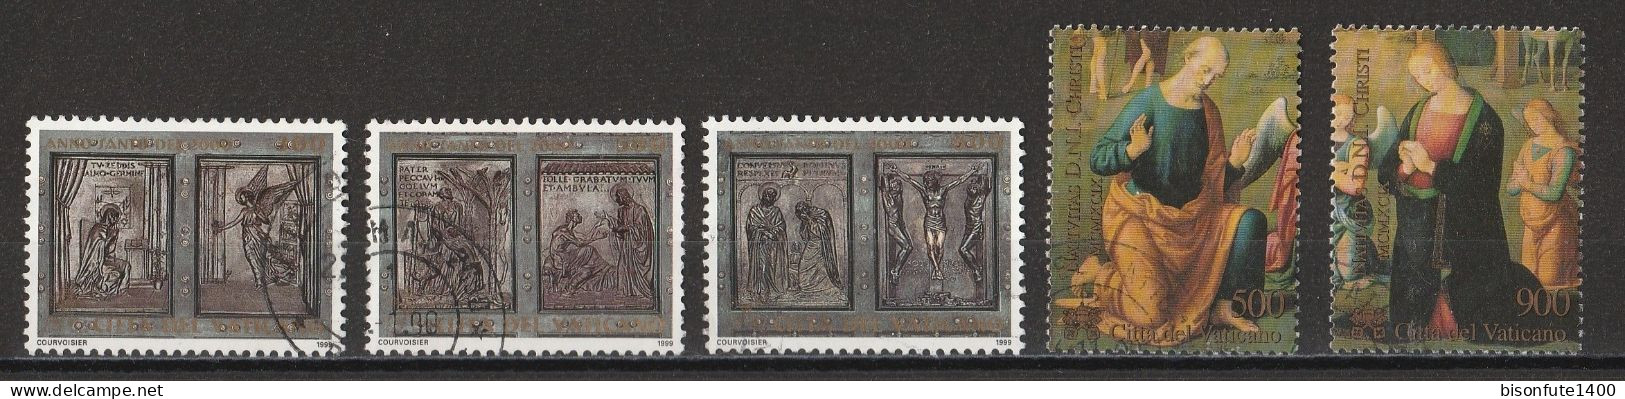 Vatican 1999 : Timbres Yvert & Tellier N° 1162 - 1164 - 1166 - 1177 - 1178 - 1179 Et 1180 Oblitérés - Used Stamps